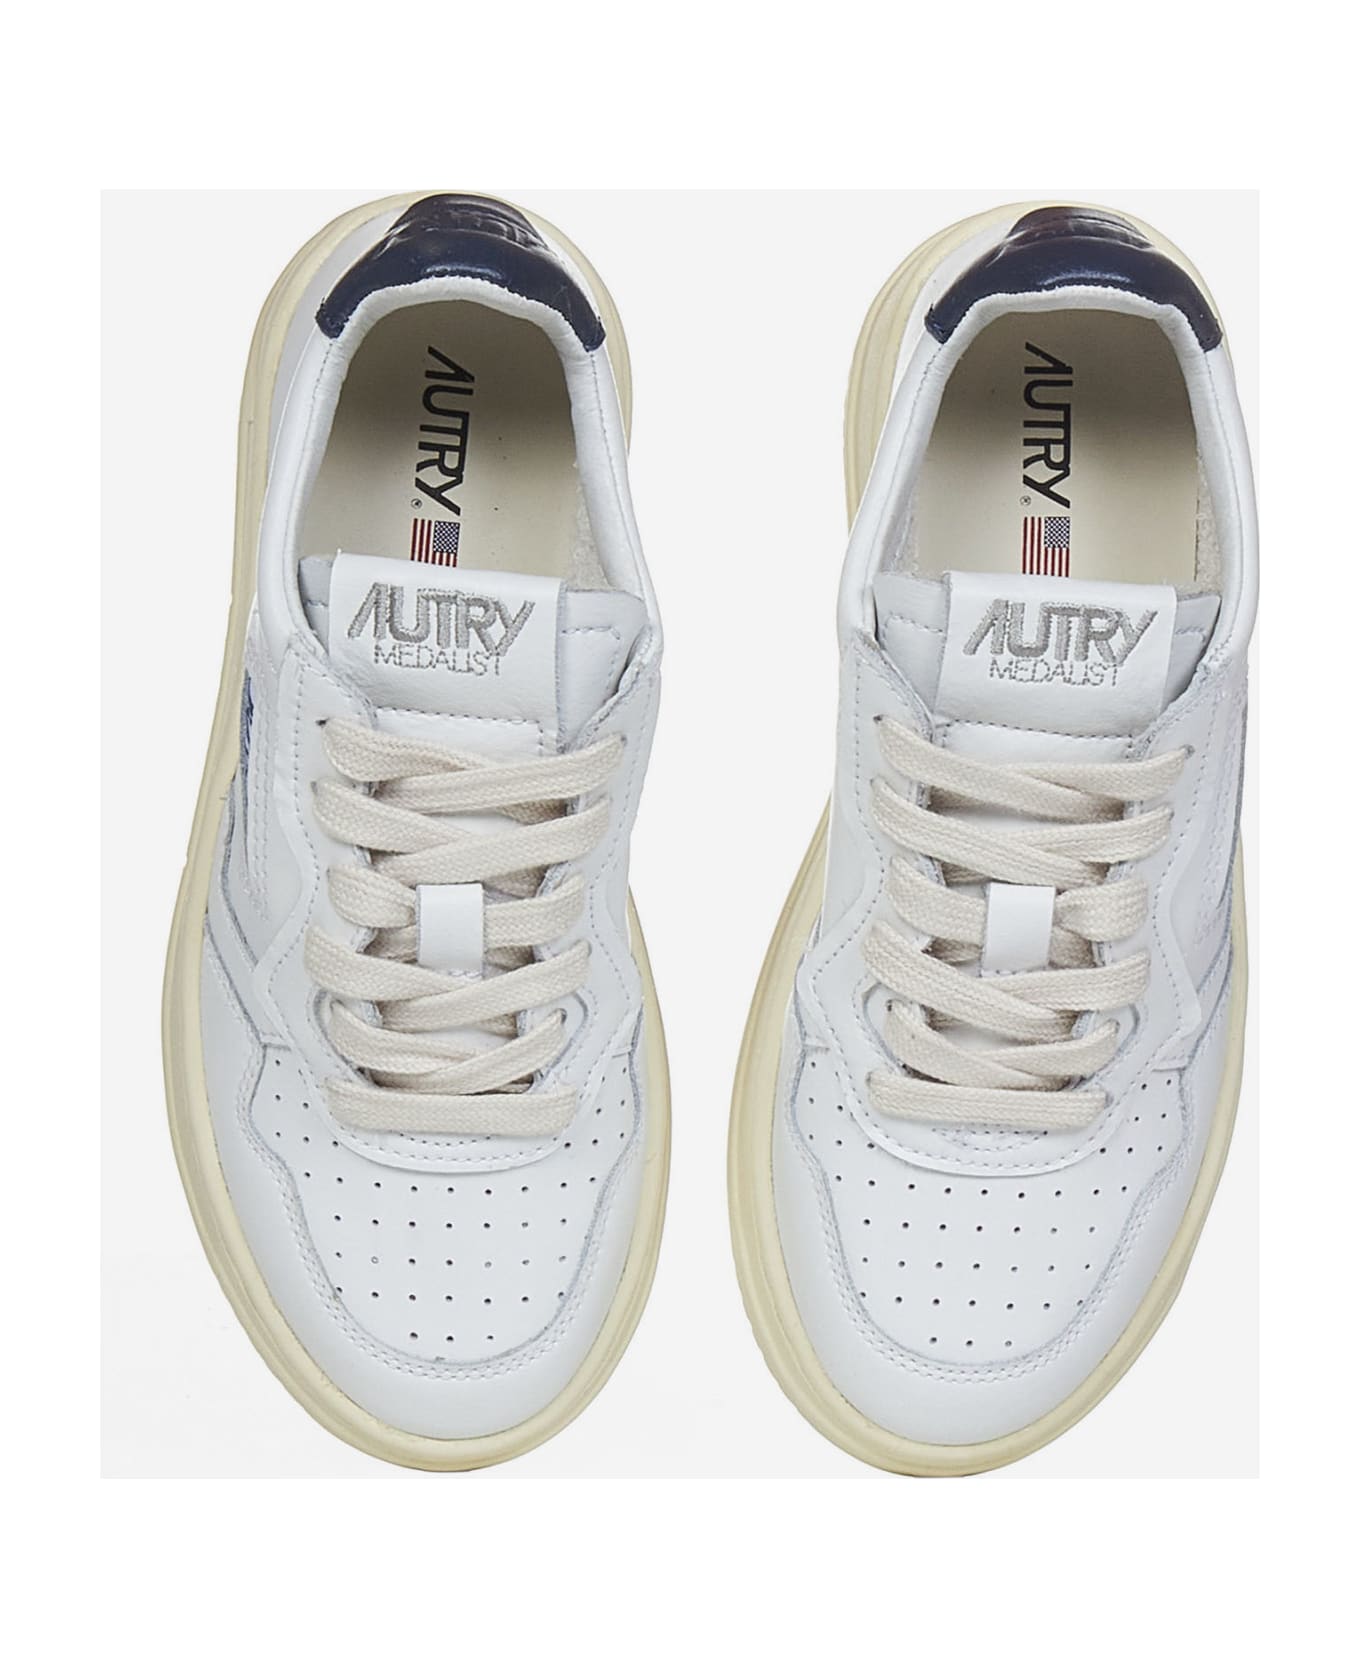 Autry Medalist Low Sneakers - NAVY